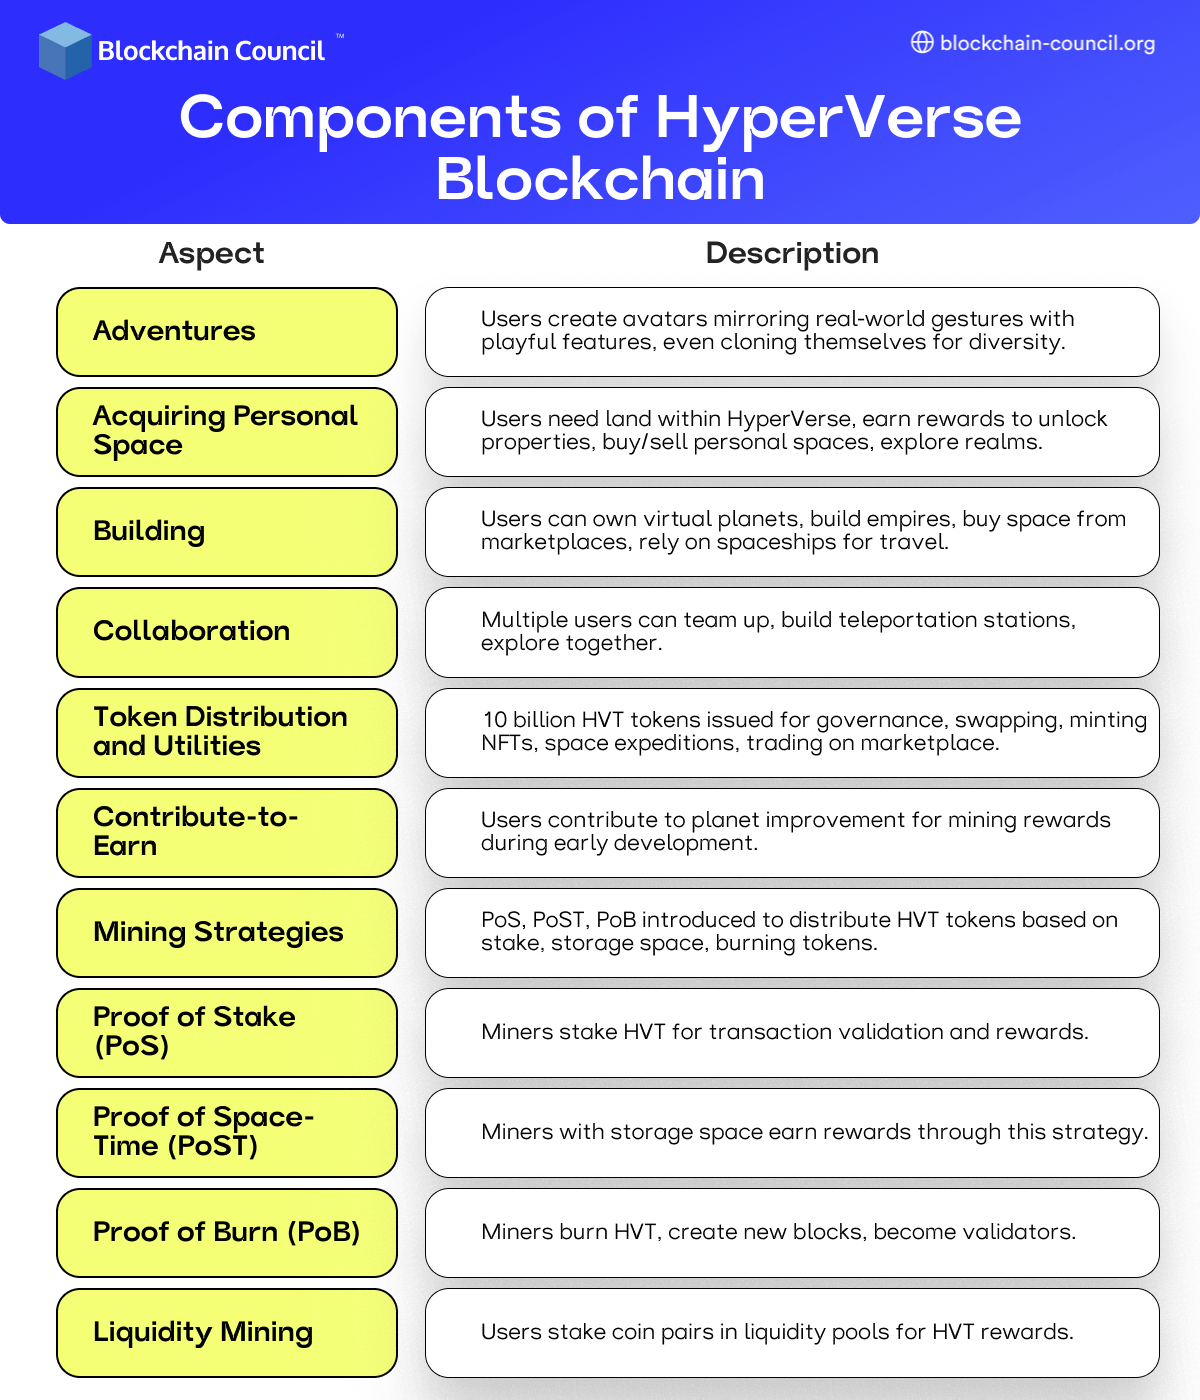 Components of HyperVerse Blockchain